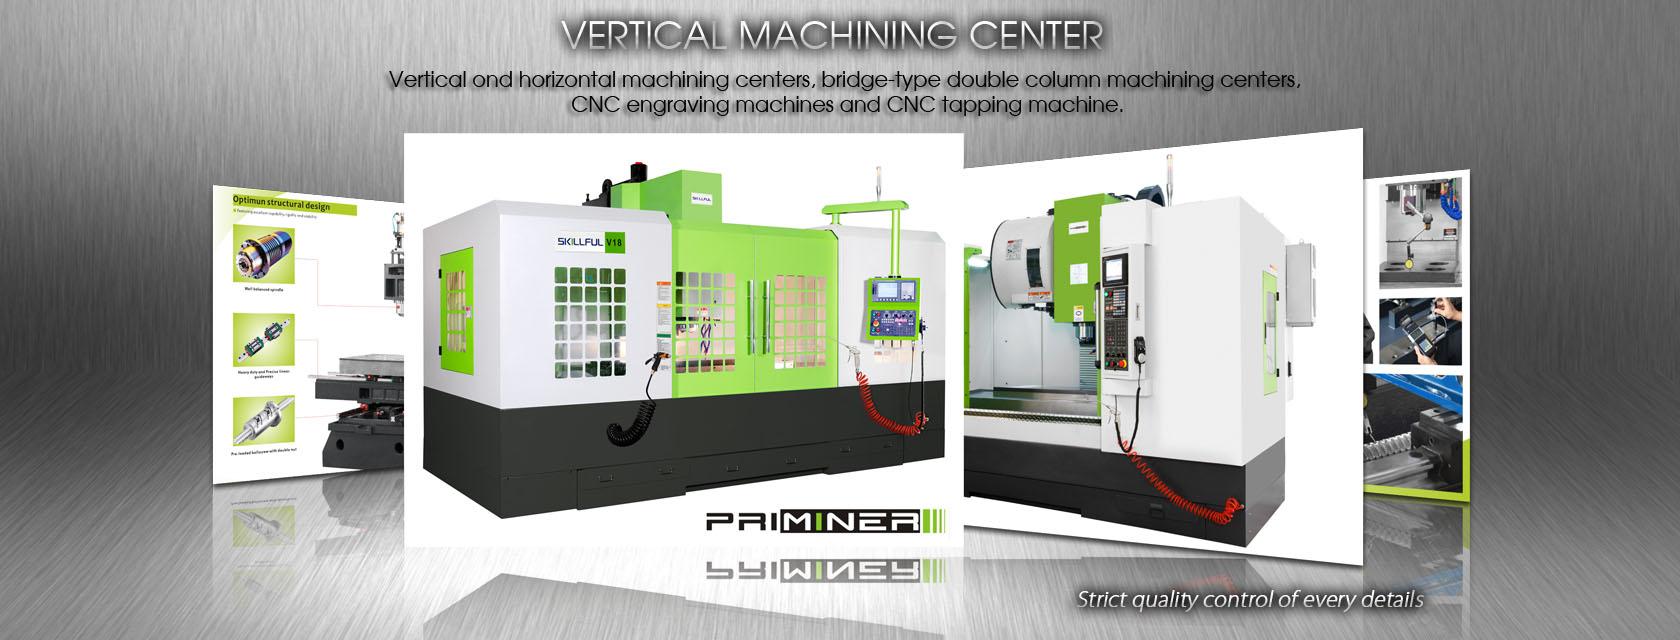 CNC Vertical Machining Center